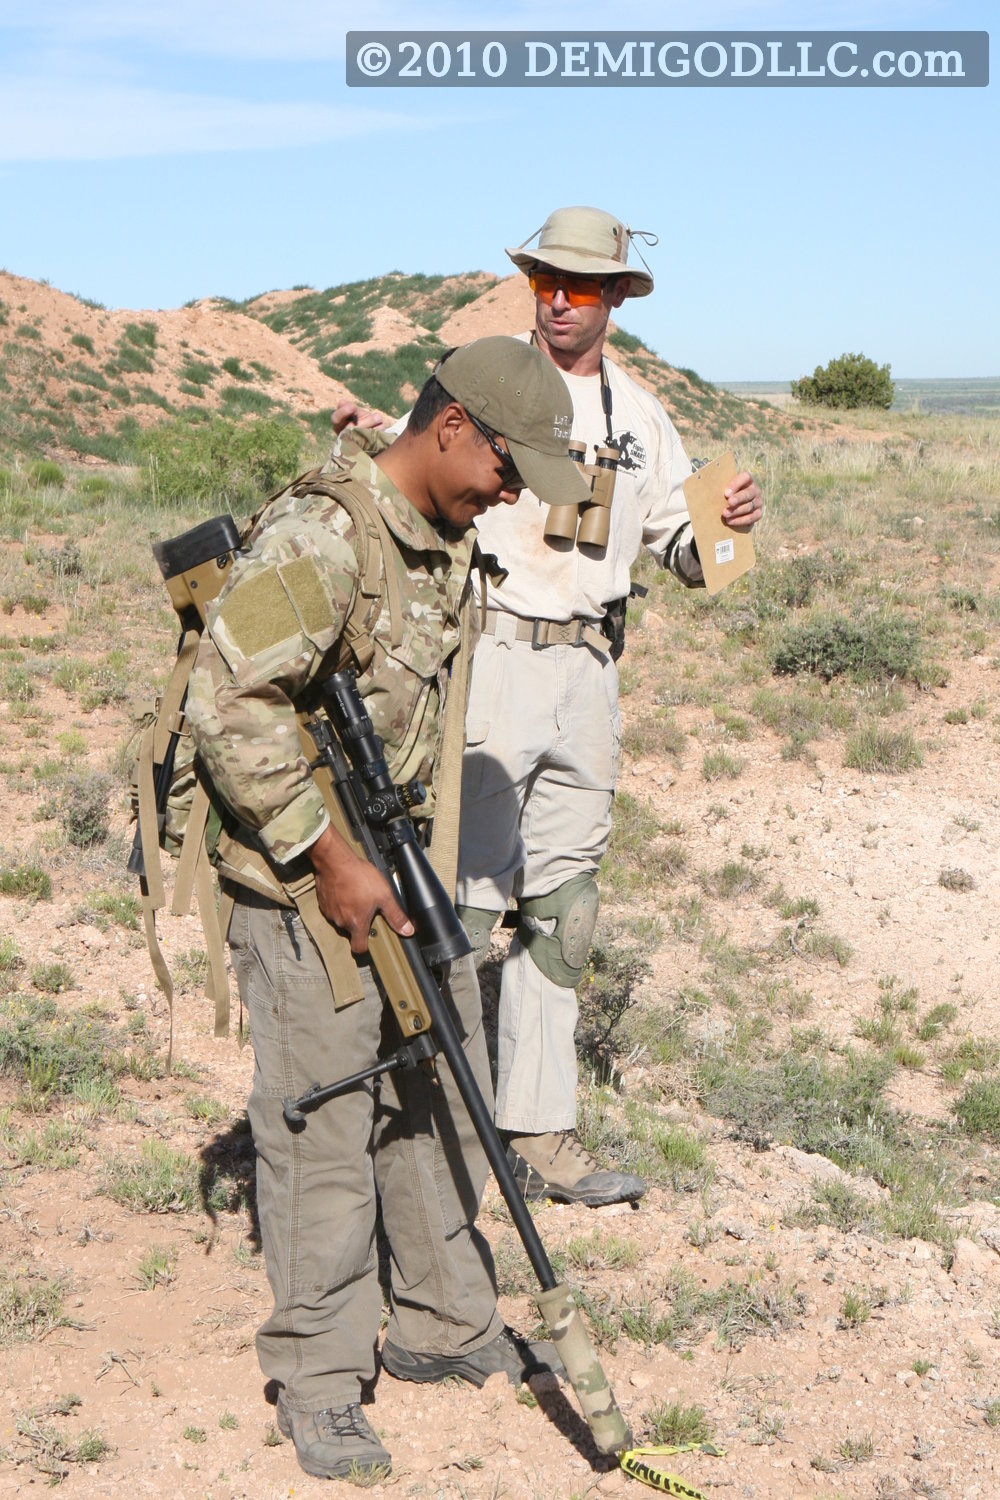 2010 Steel Safari Rifle Match
, photo 